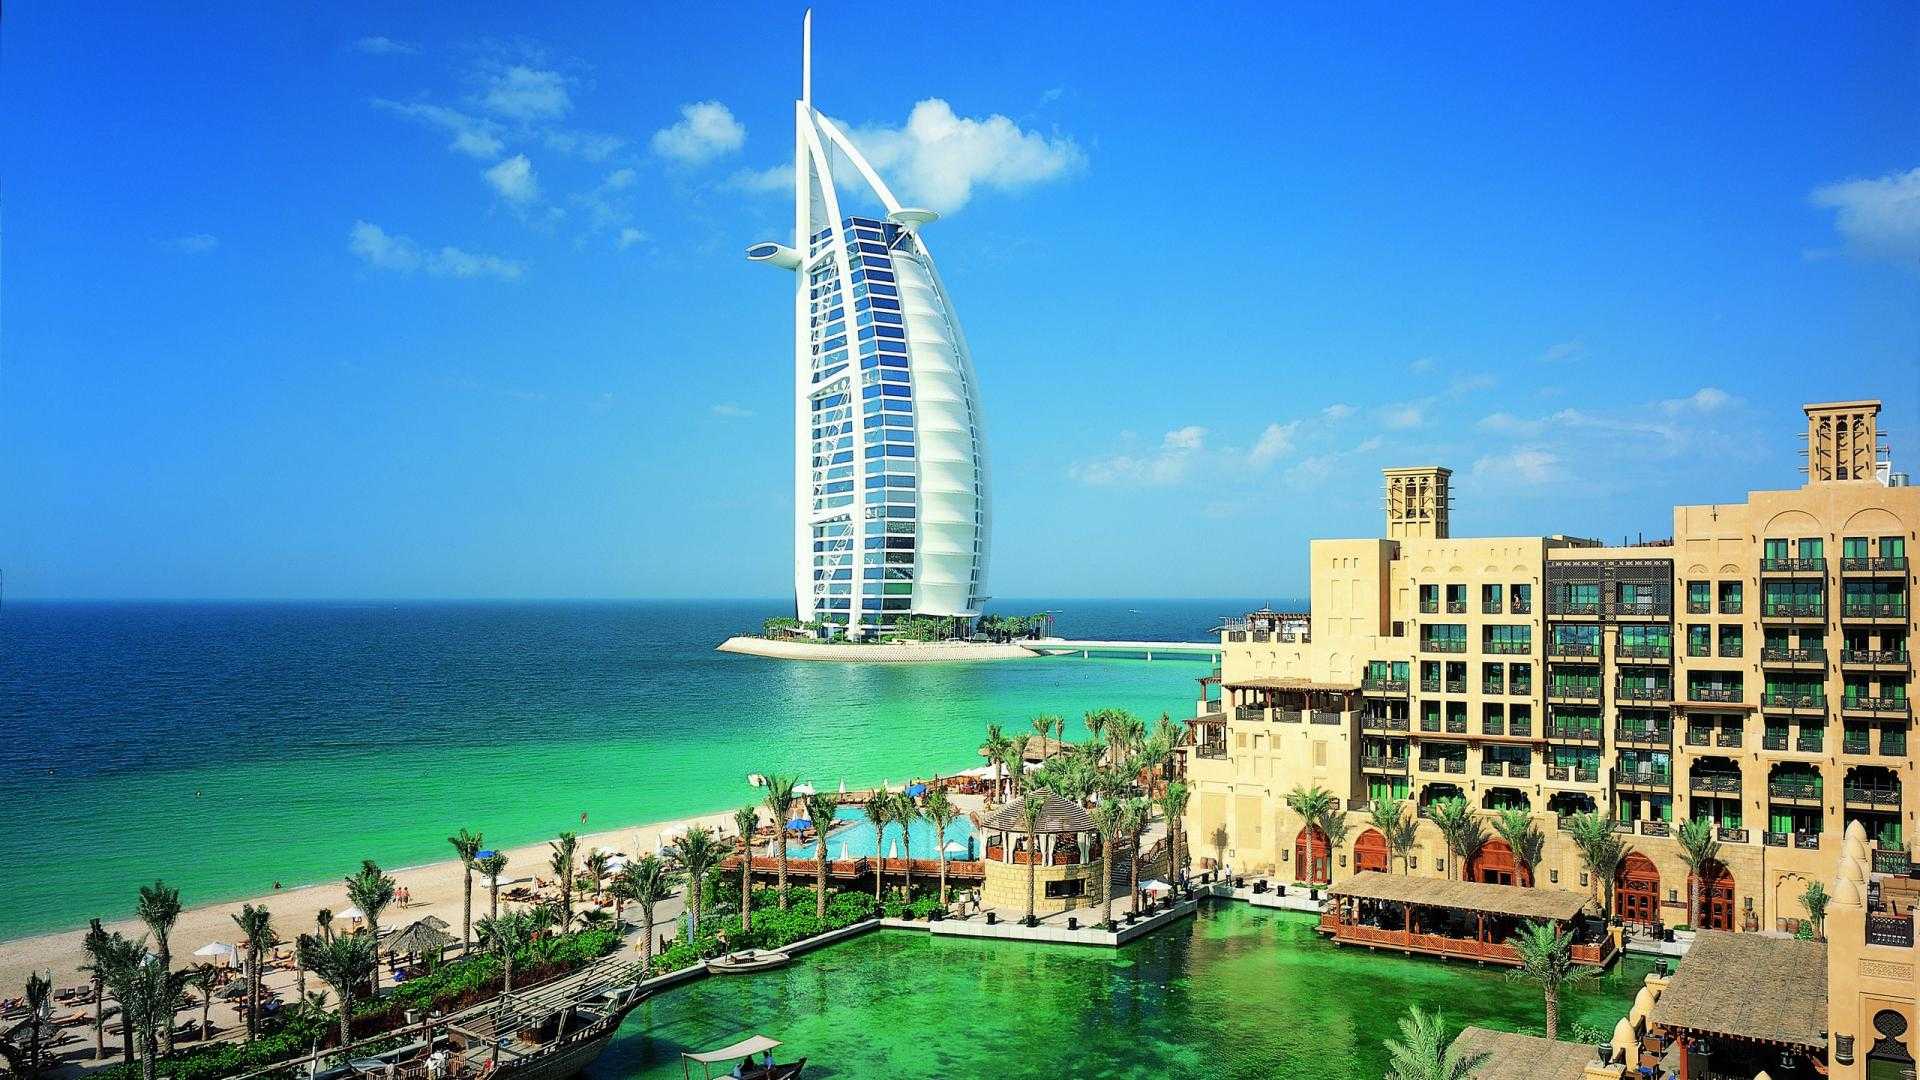 Spellbinding 5 day Dubai honeymoon package for fun couples